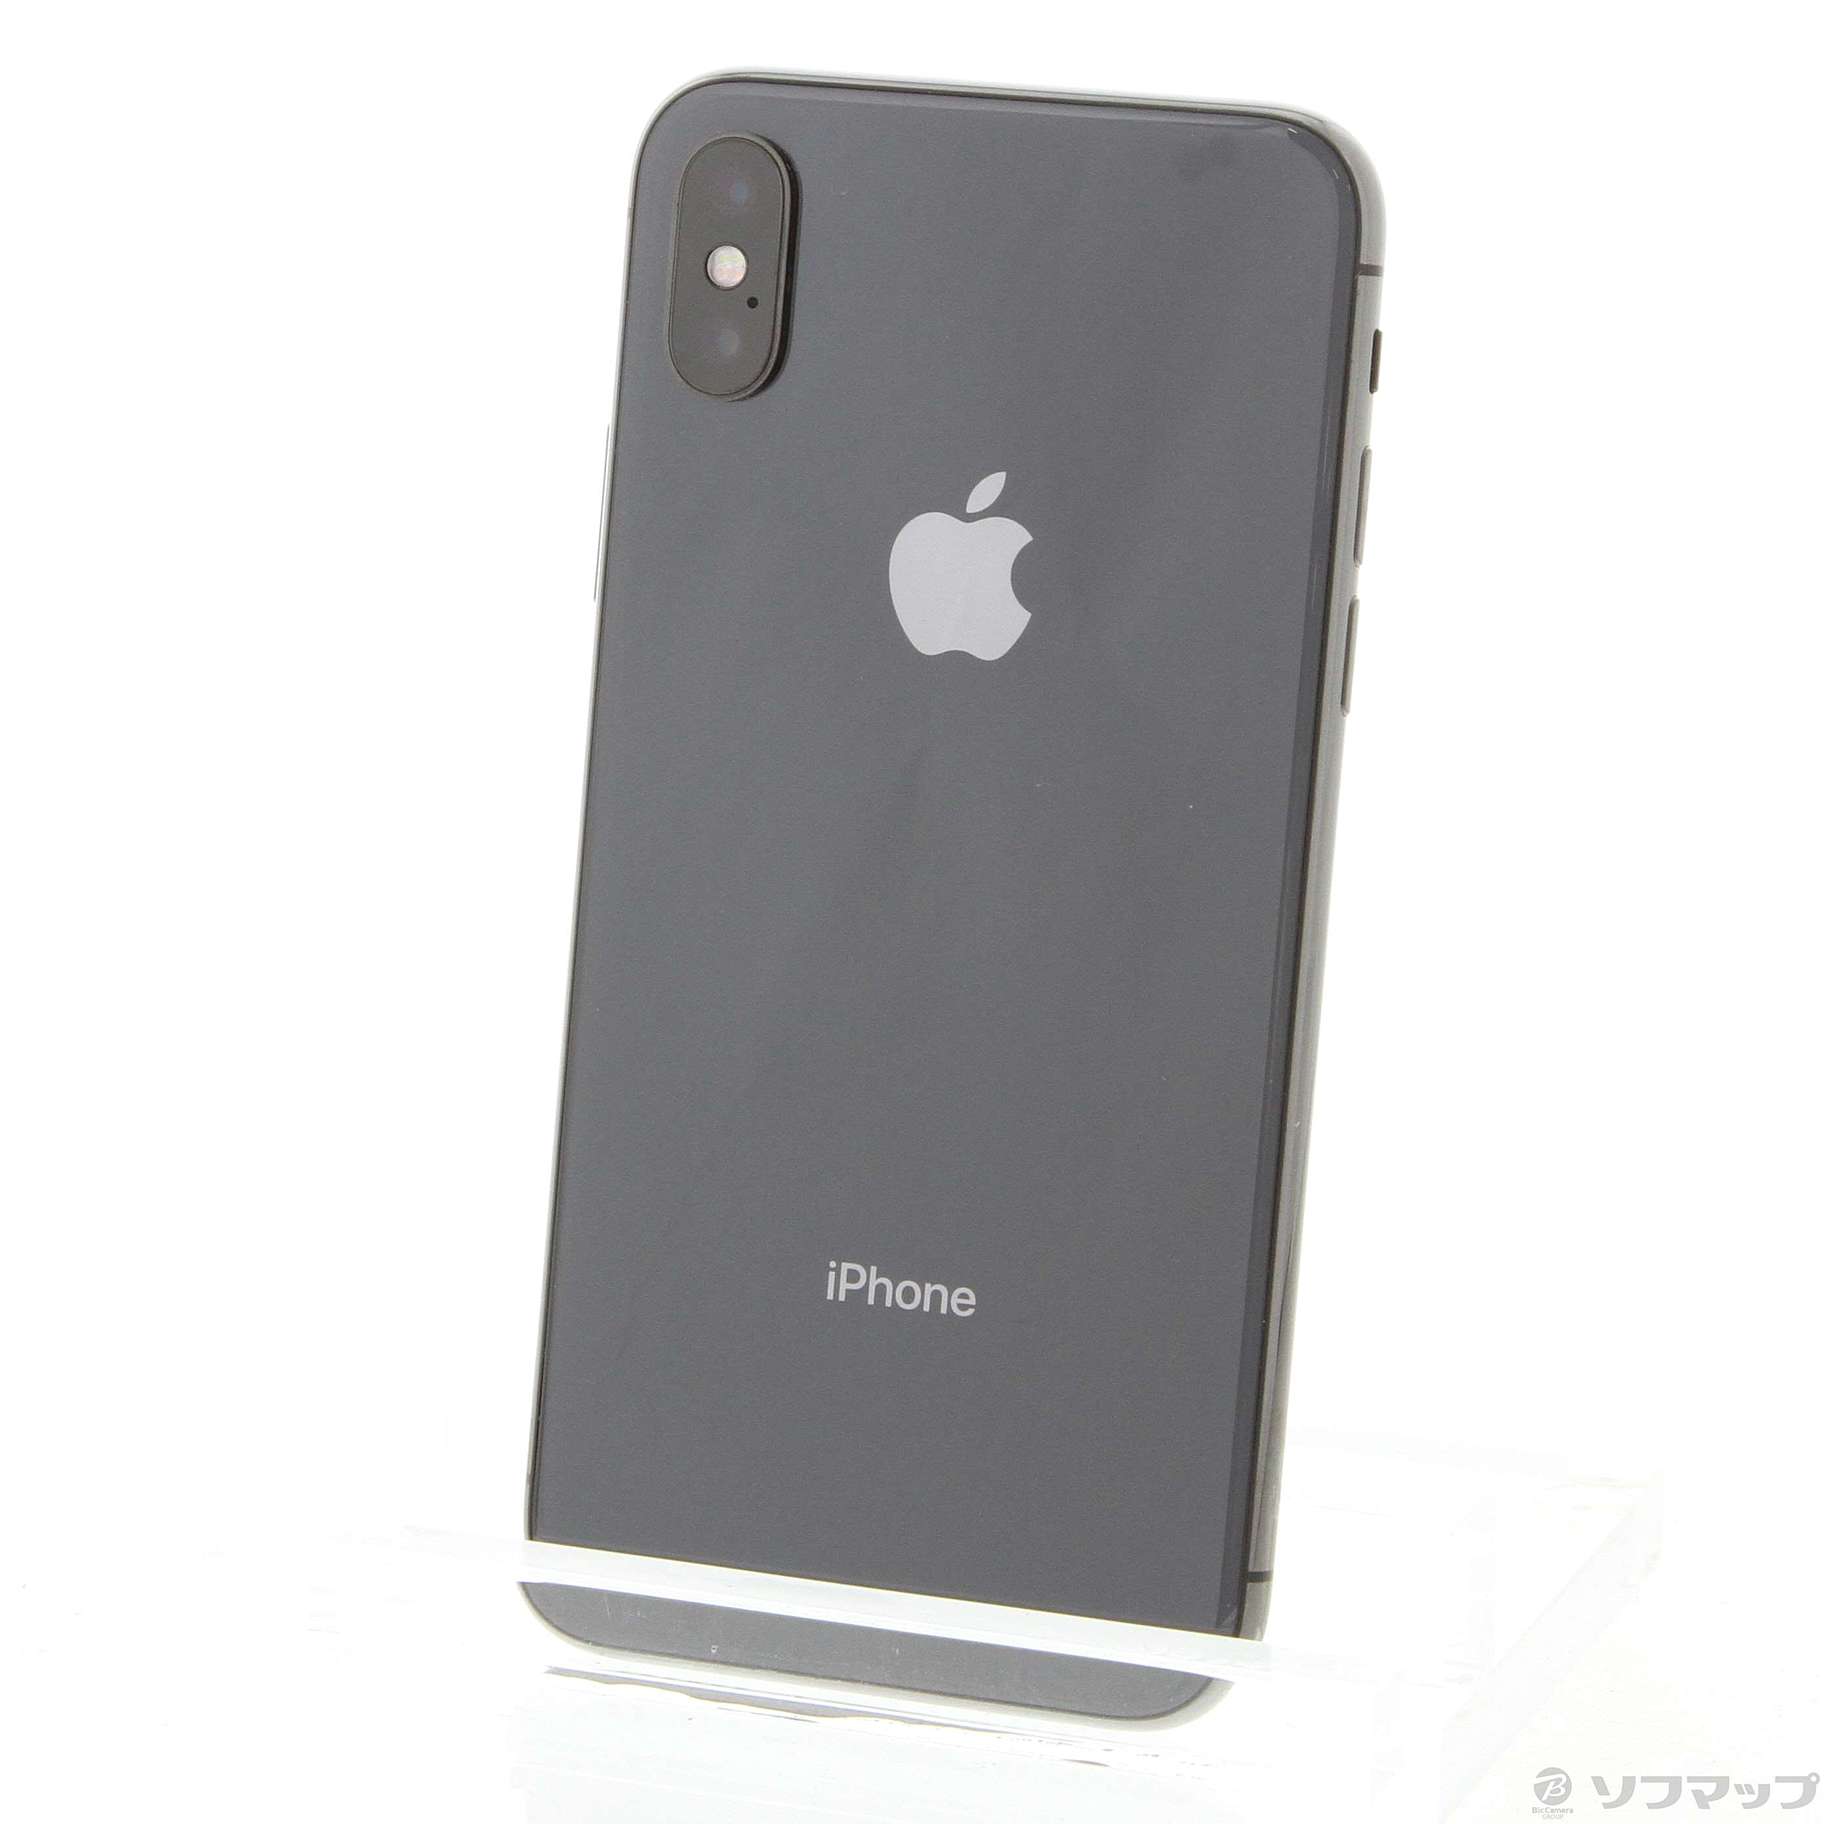 iPhone X Space Gray 256 GB Softbank